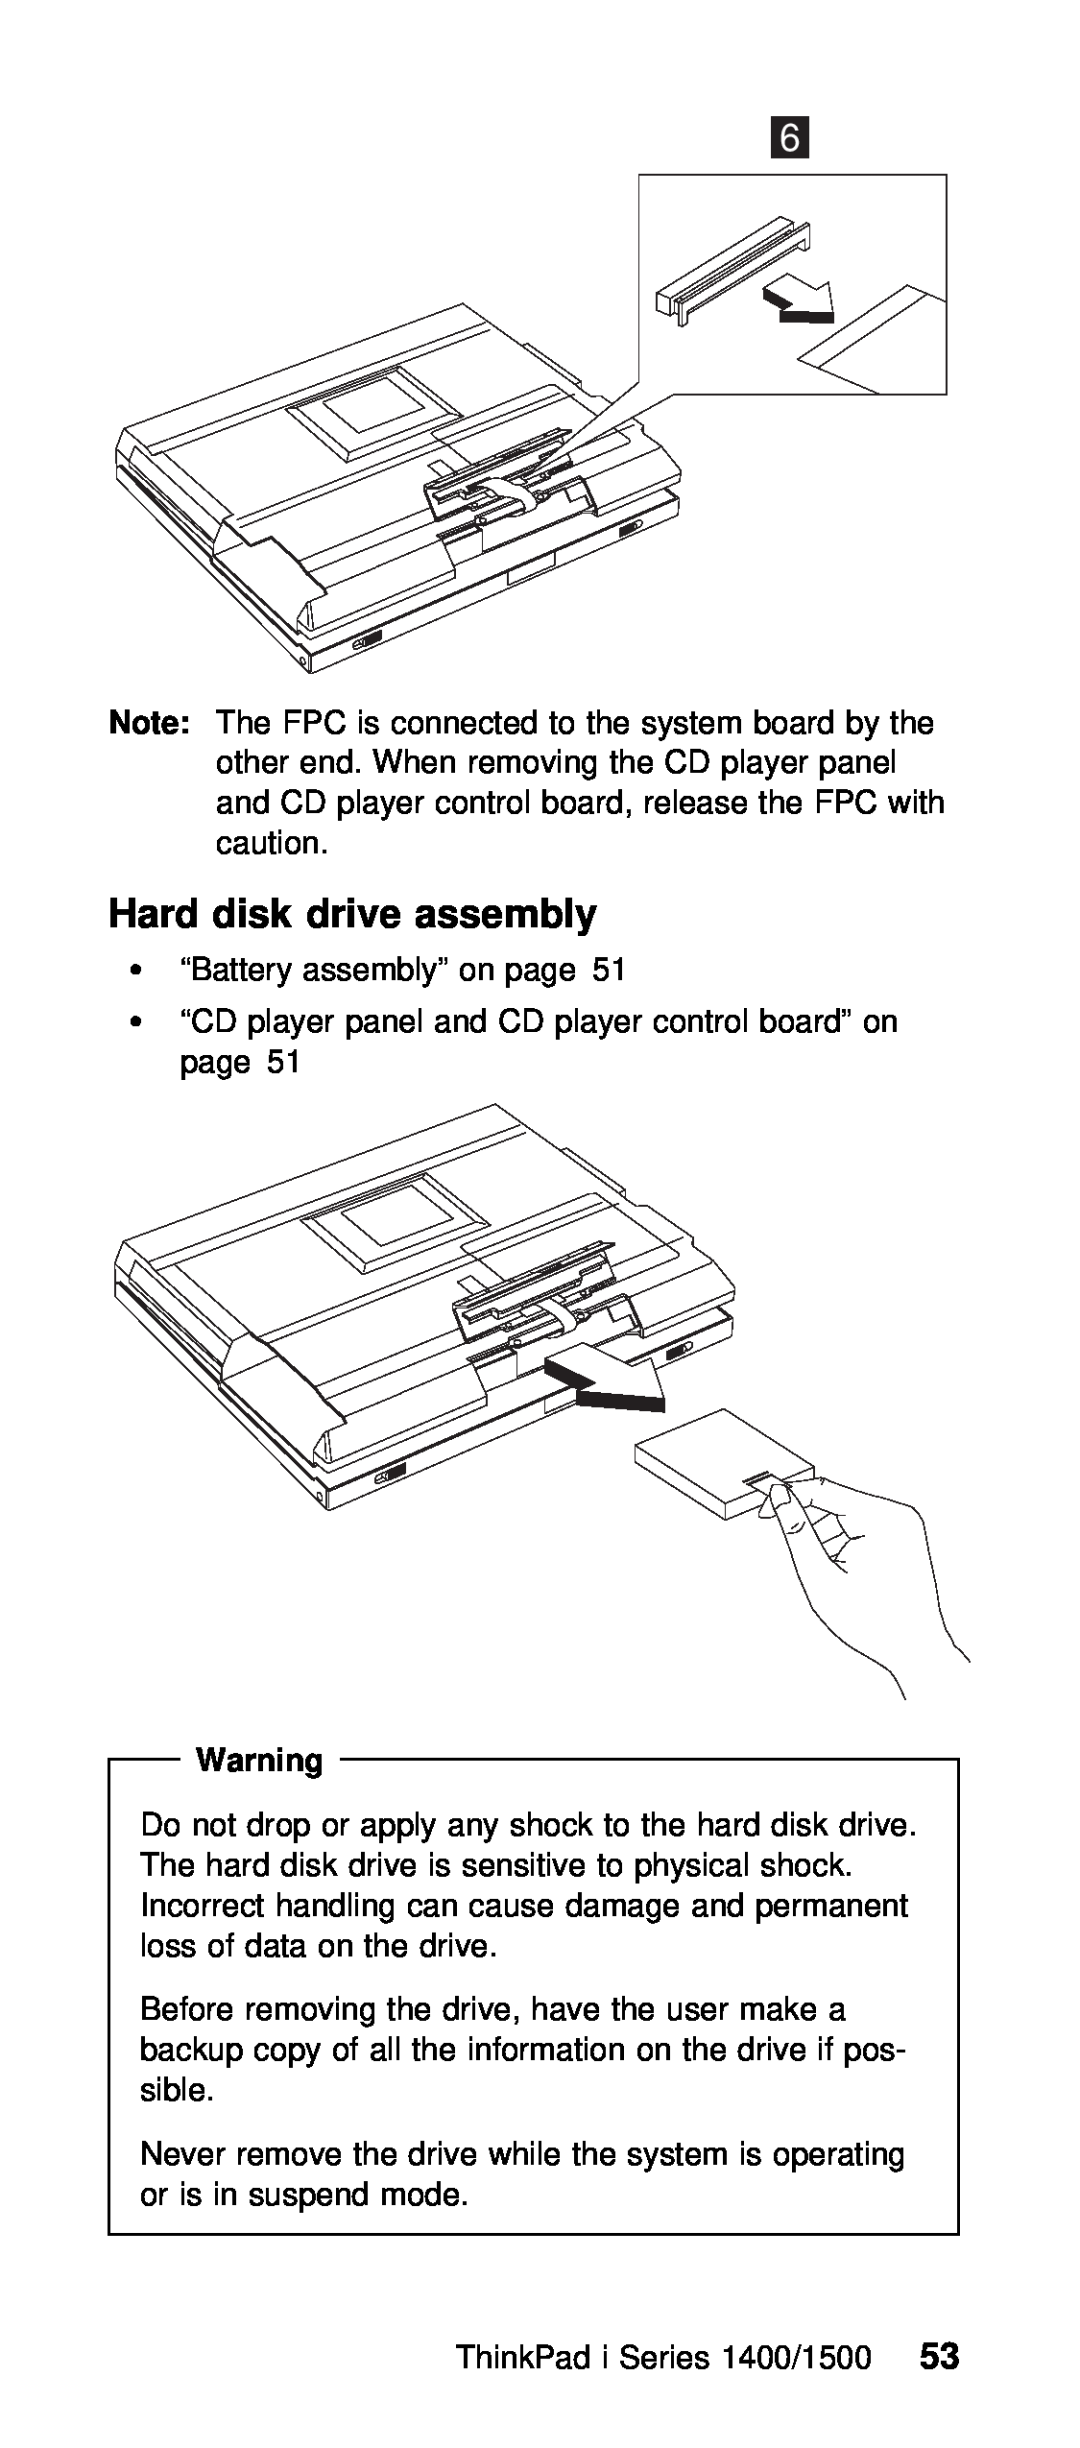 IBM Series 1400, Series 1500 manual Hard disk drive assembly, permane 